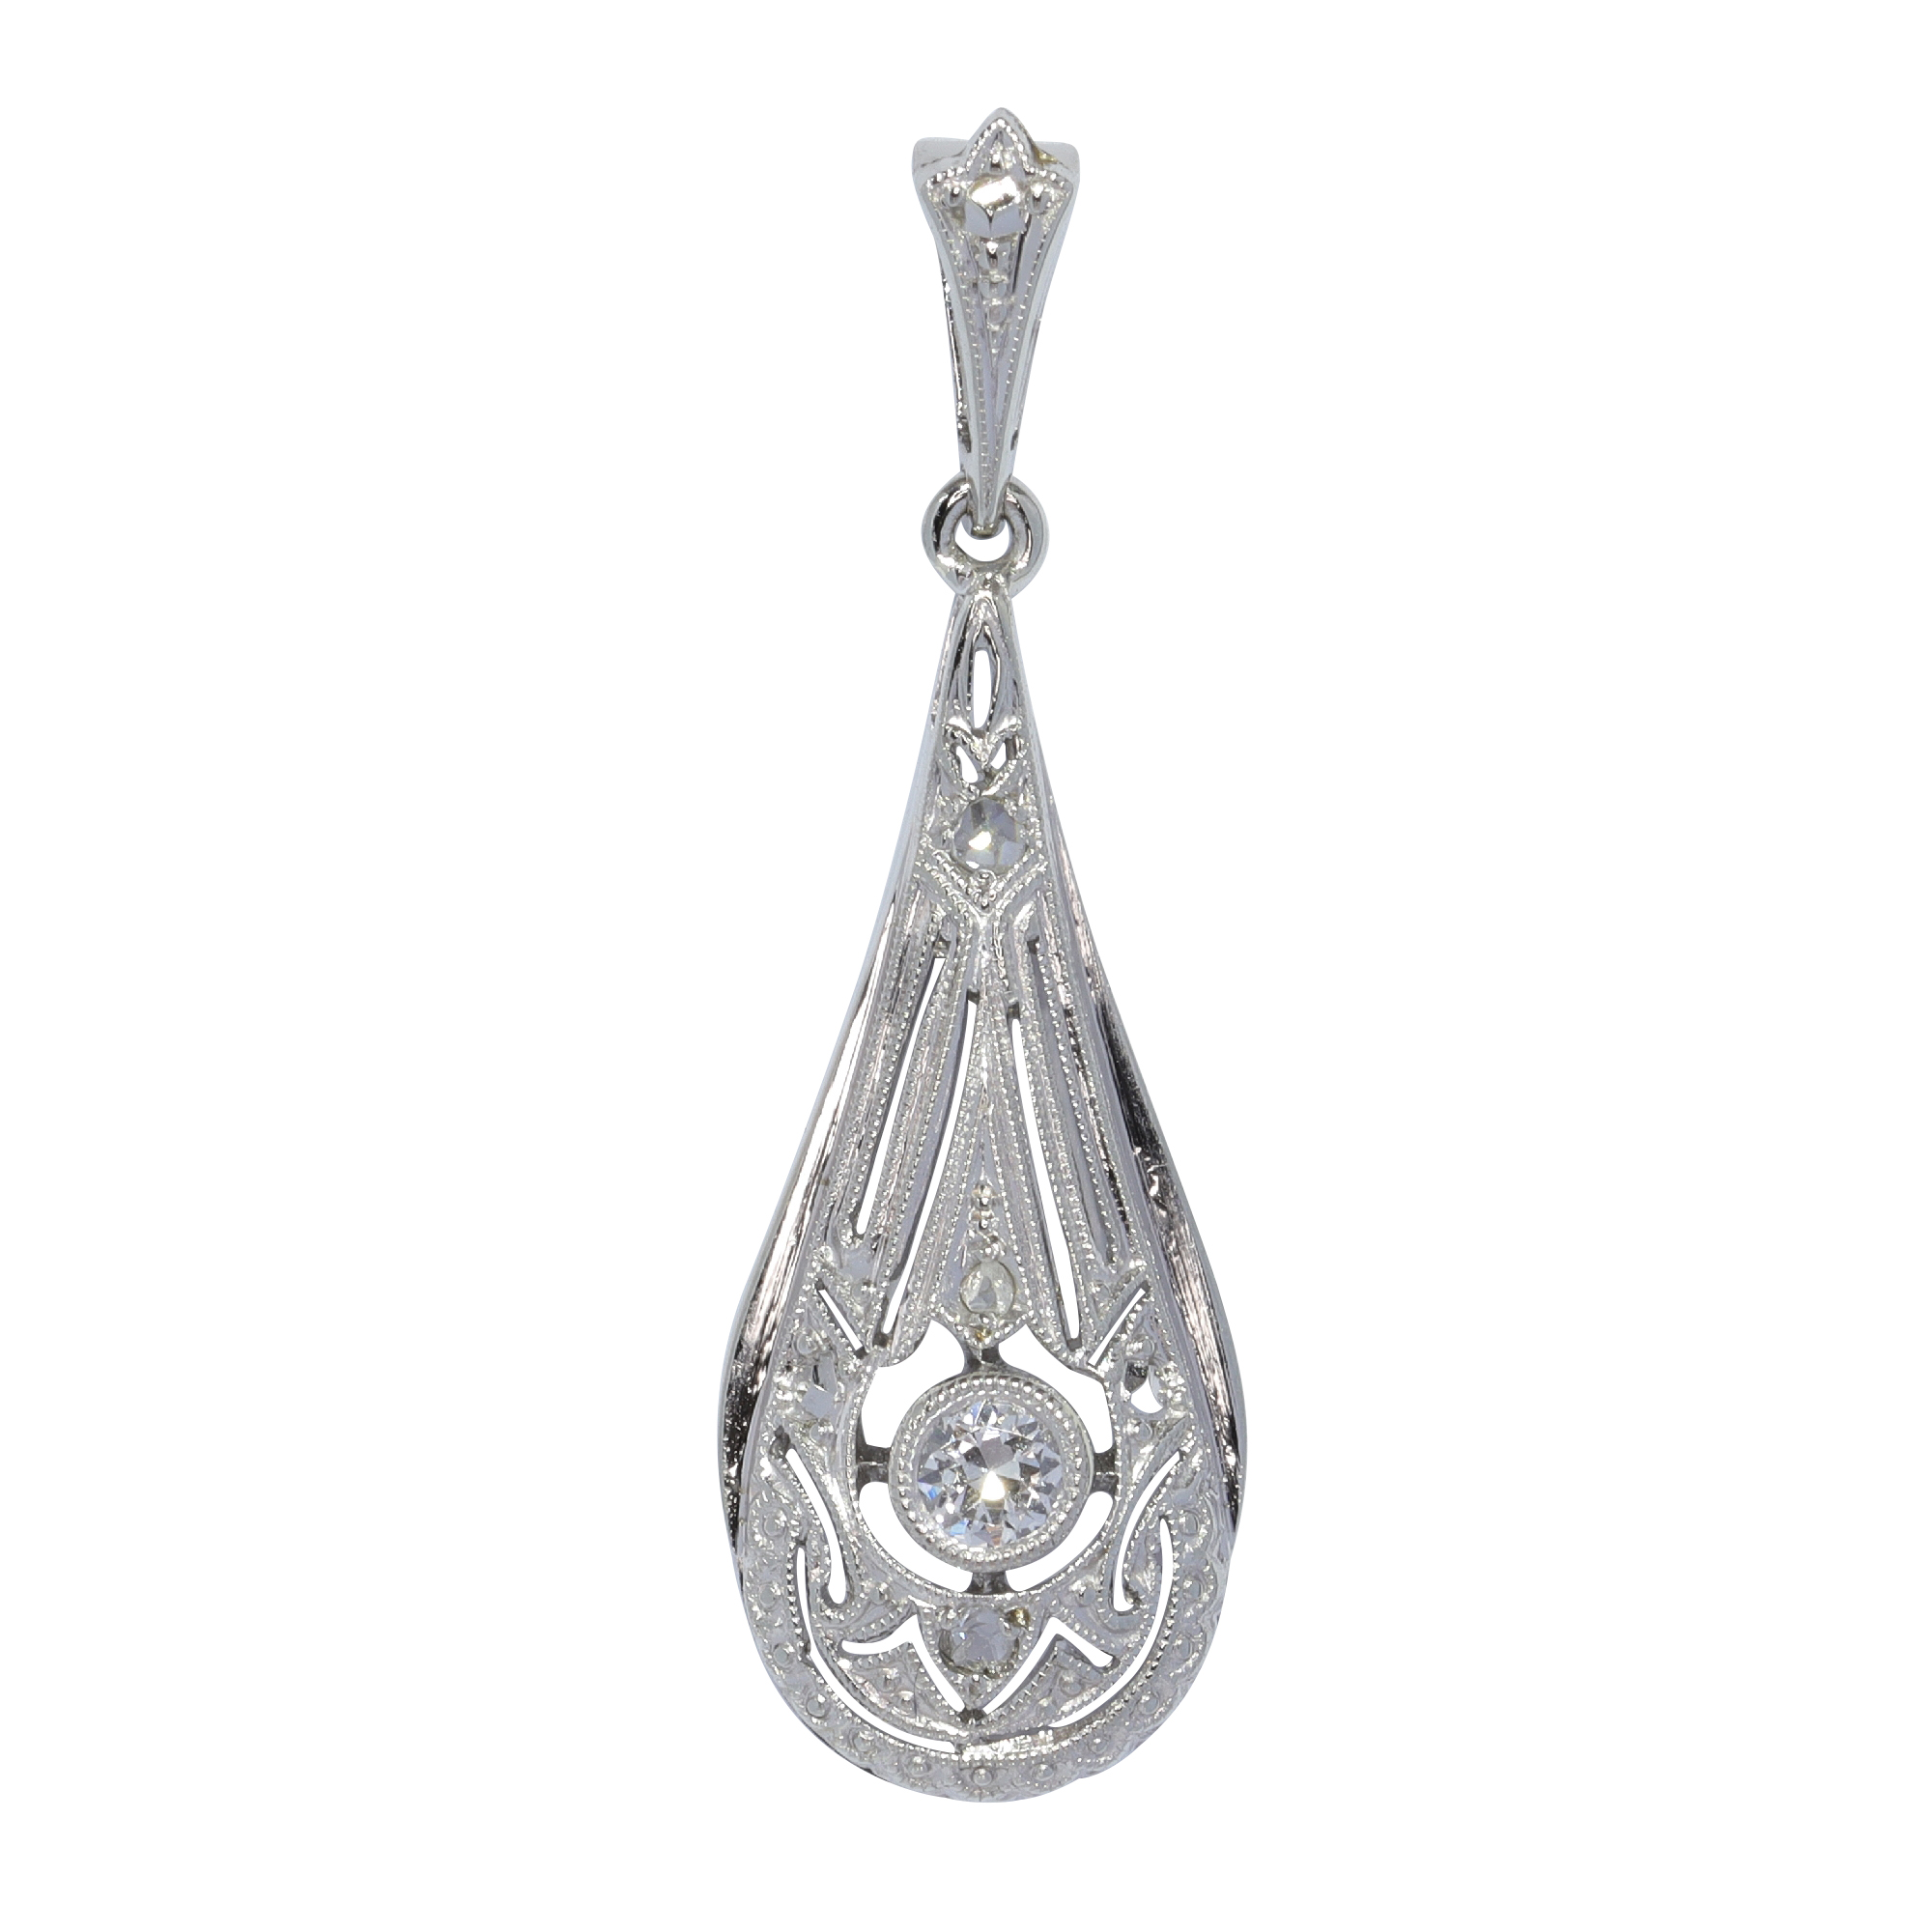 Bonhams : An impressive art deco diamond necklace, by Cartier,